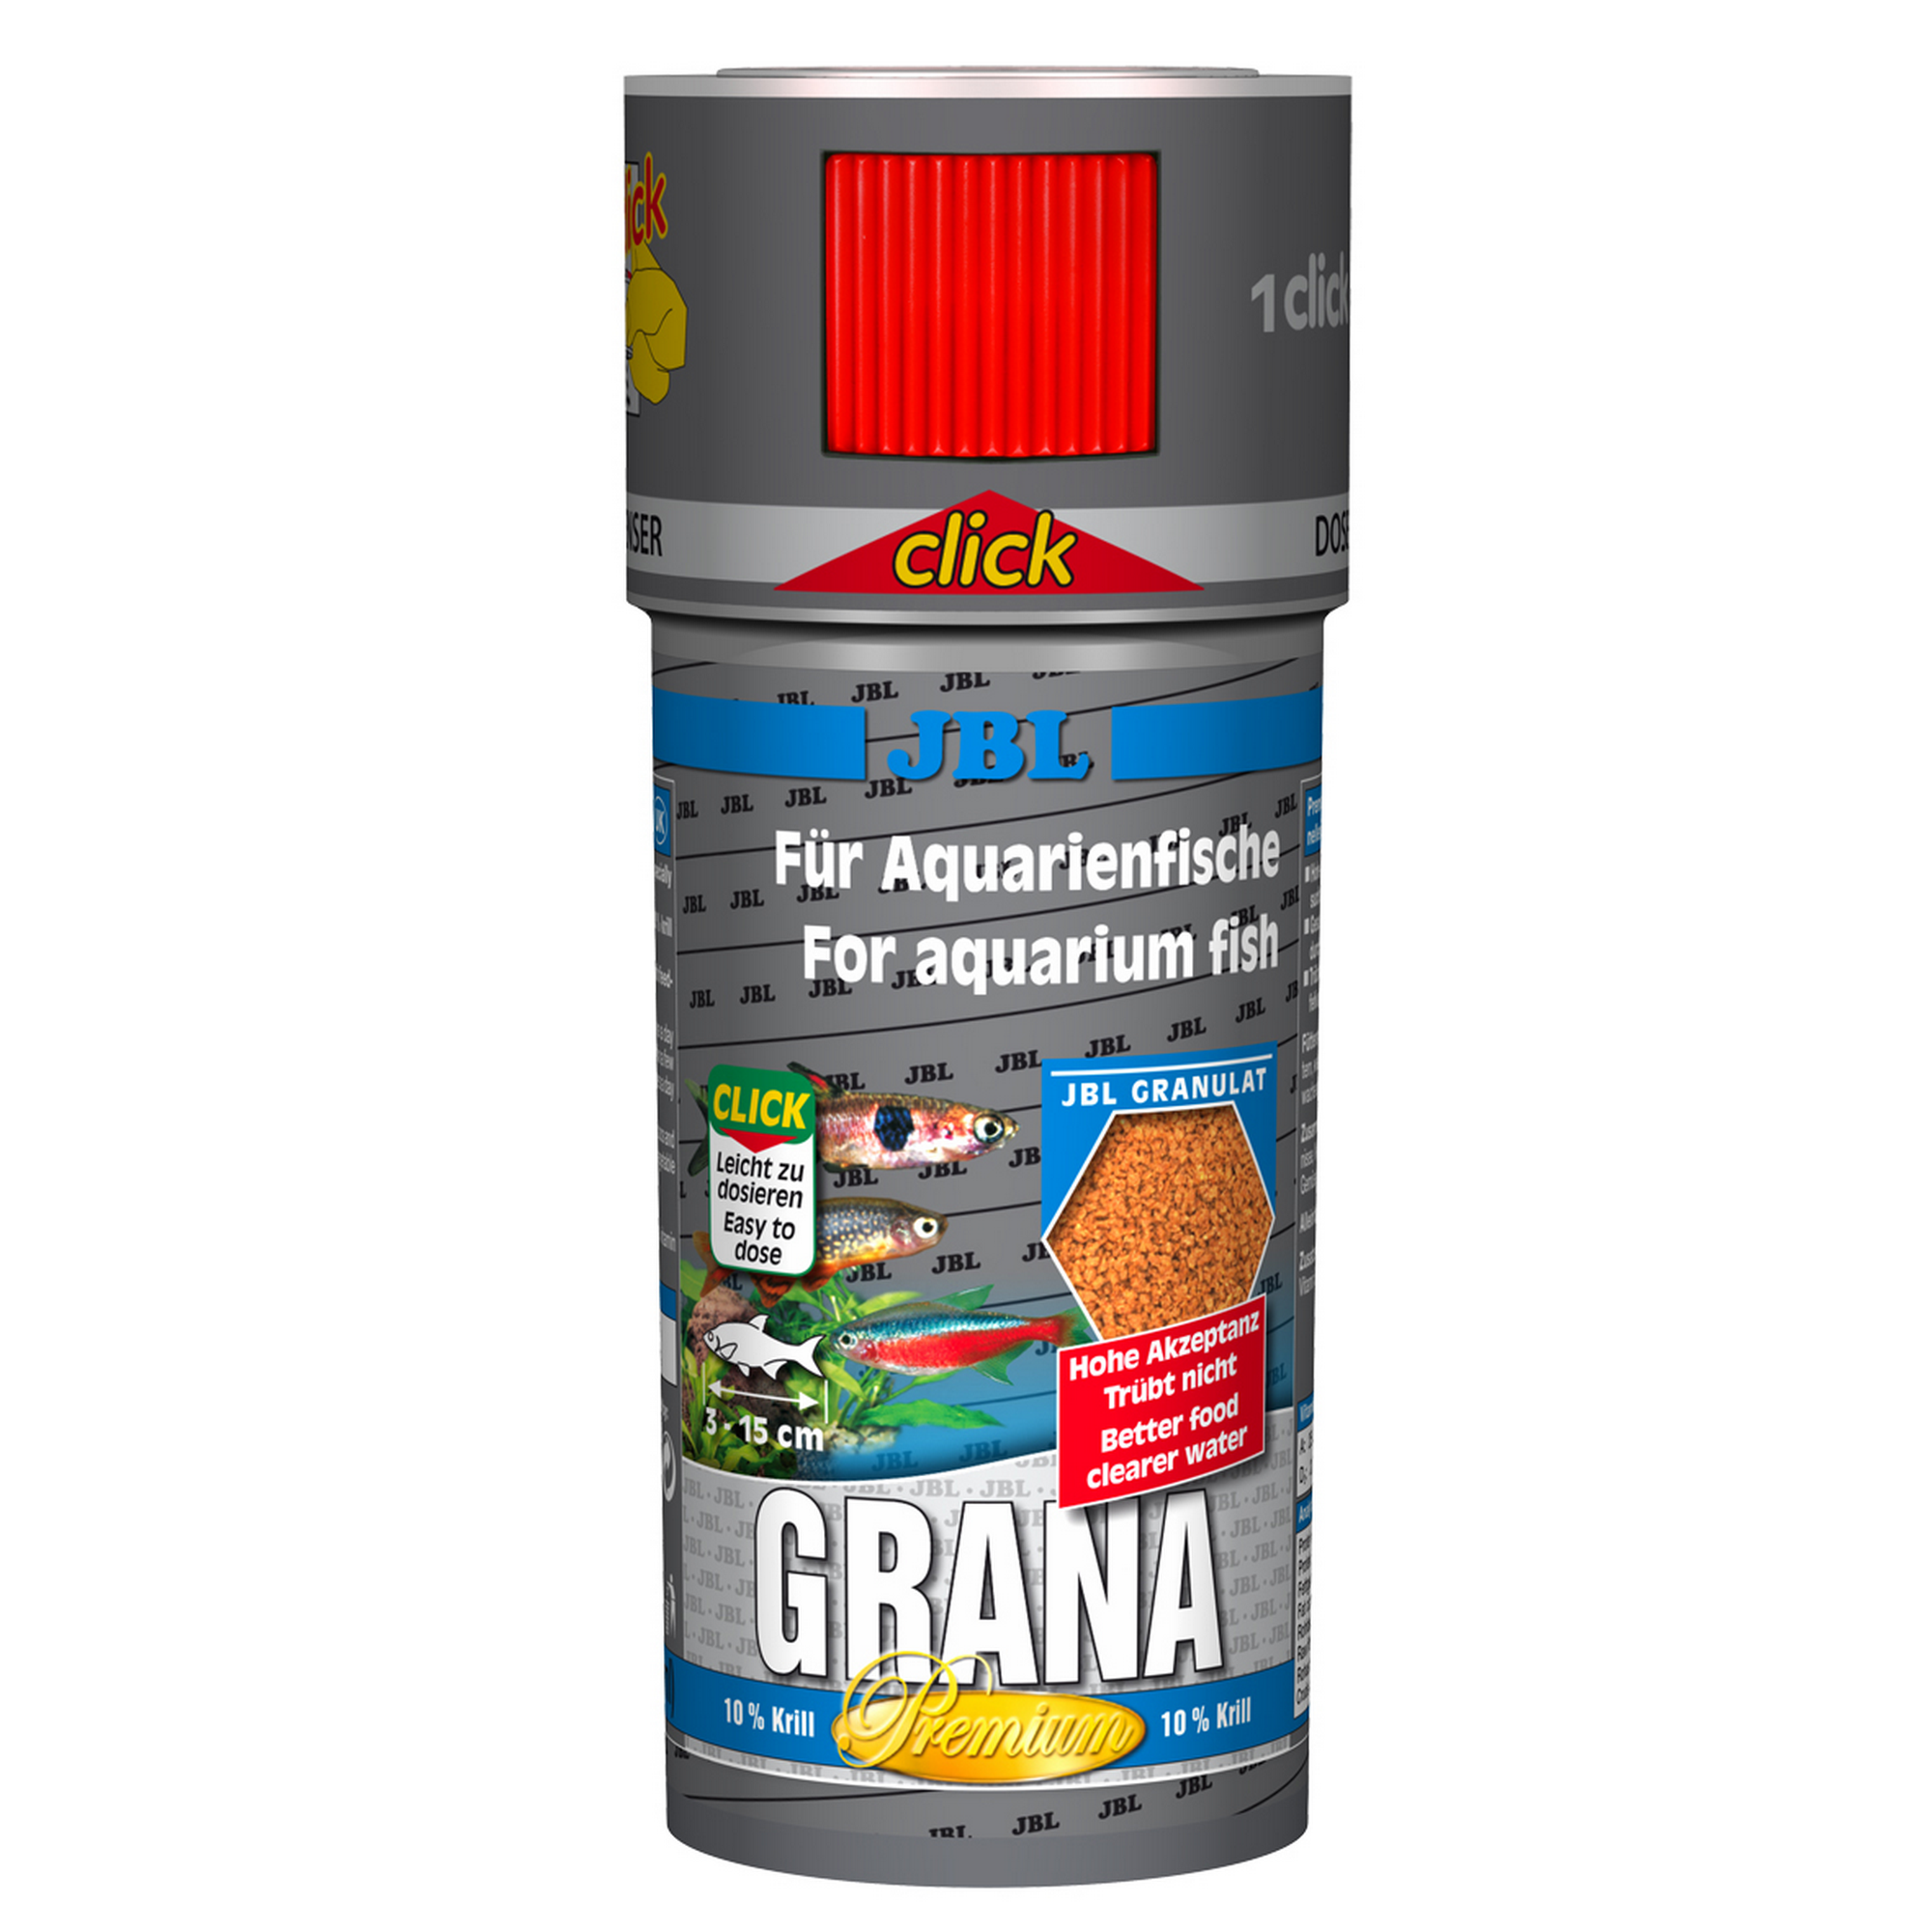 Grana Premium Für Aquarienfische 250 ml + product picture